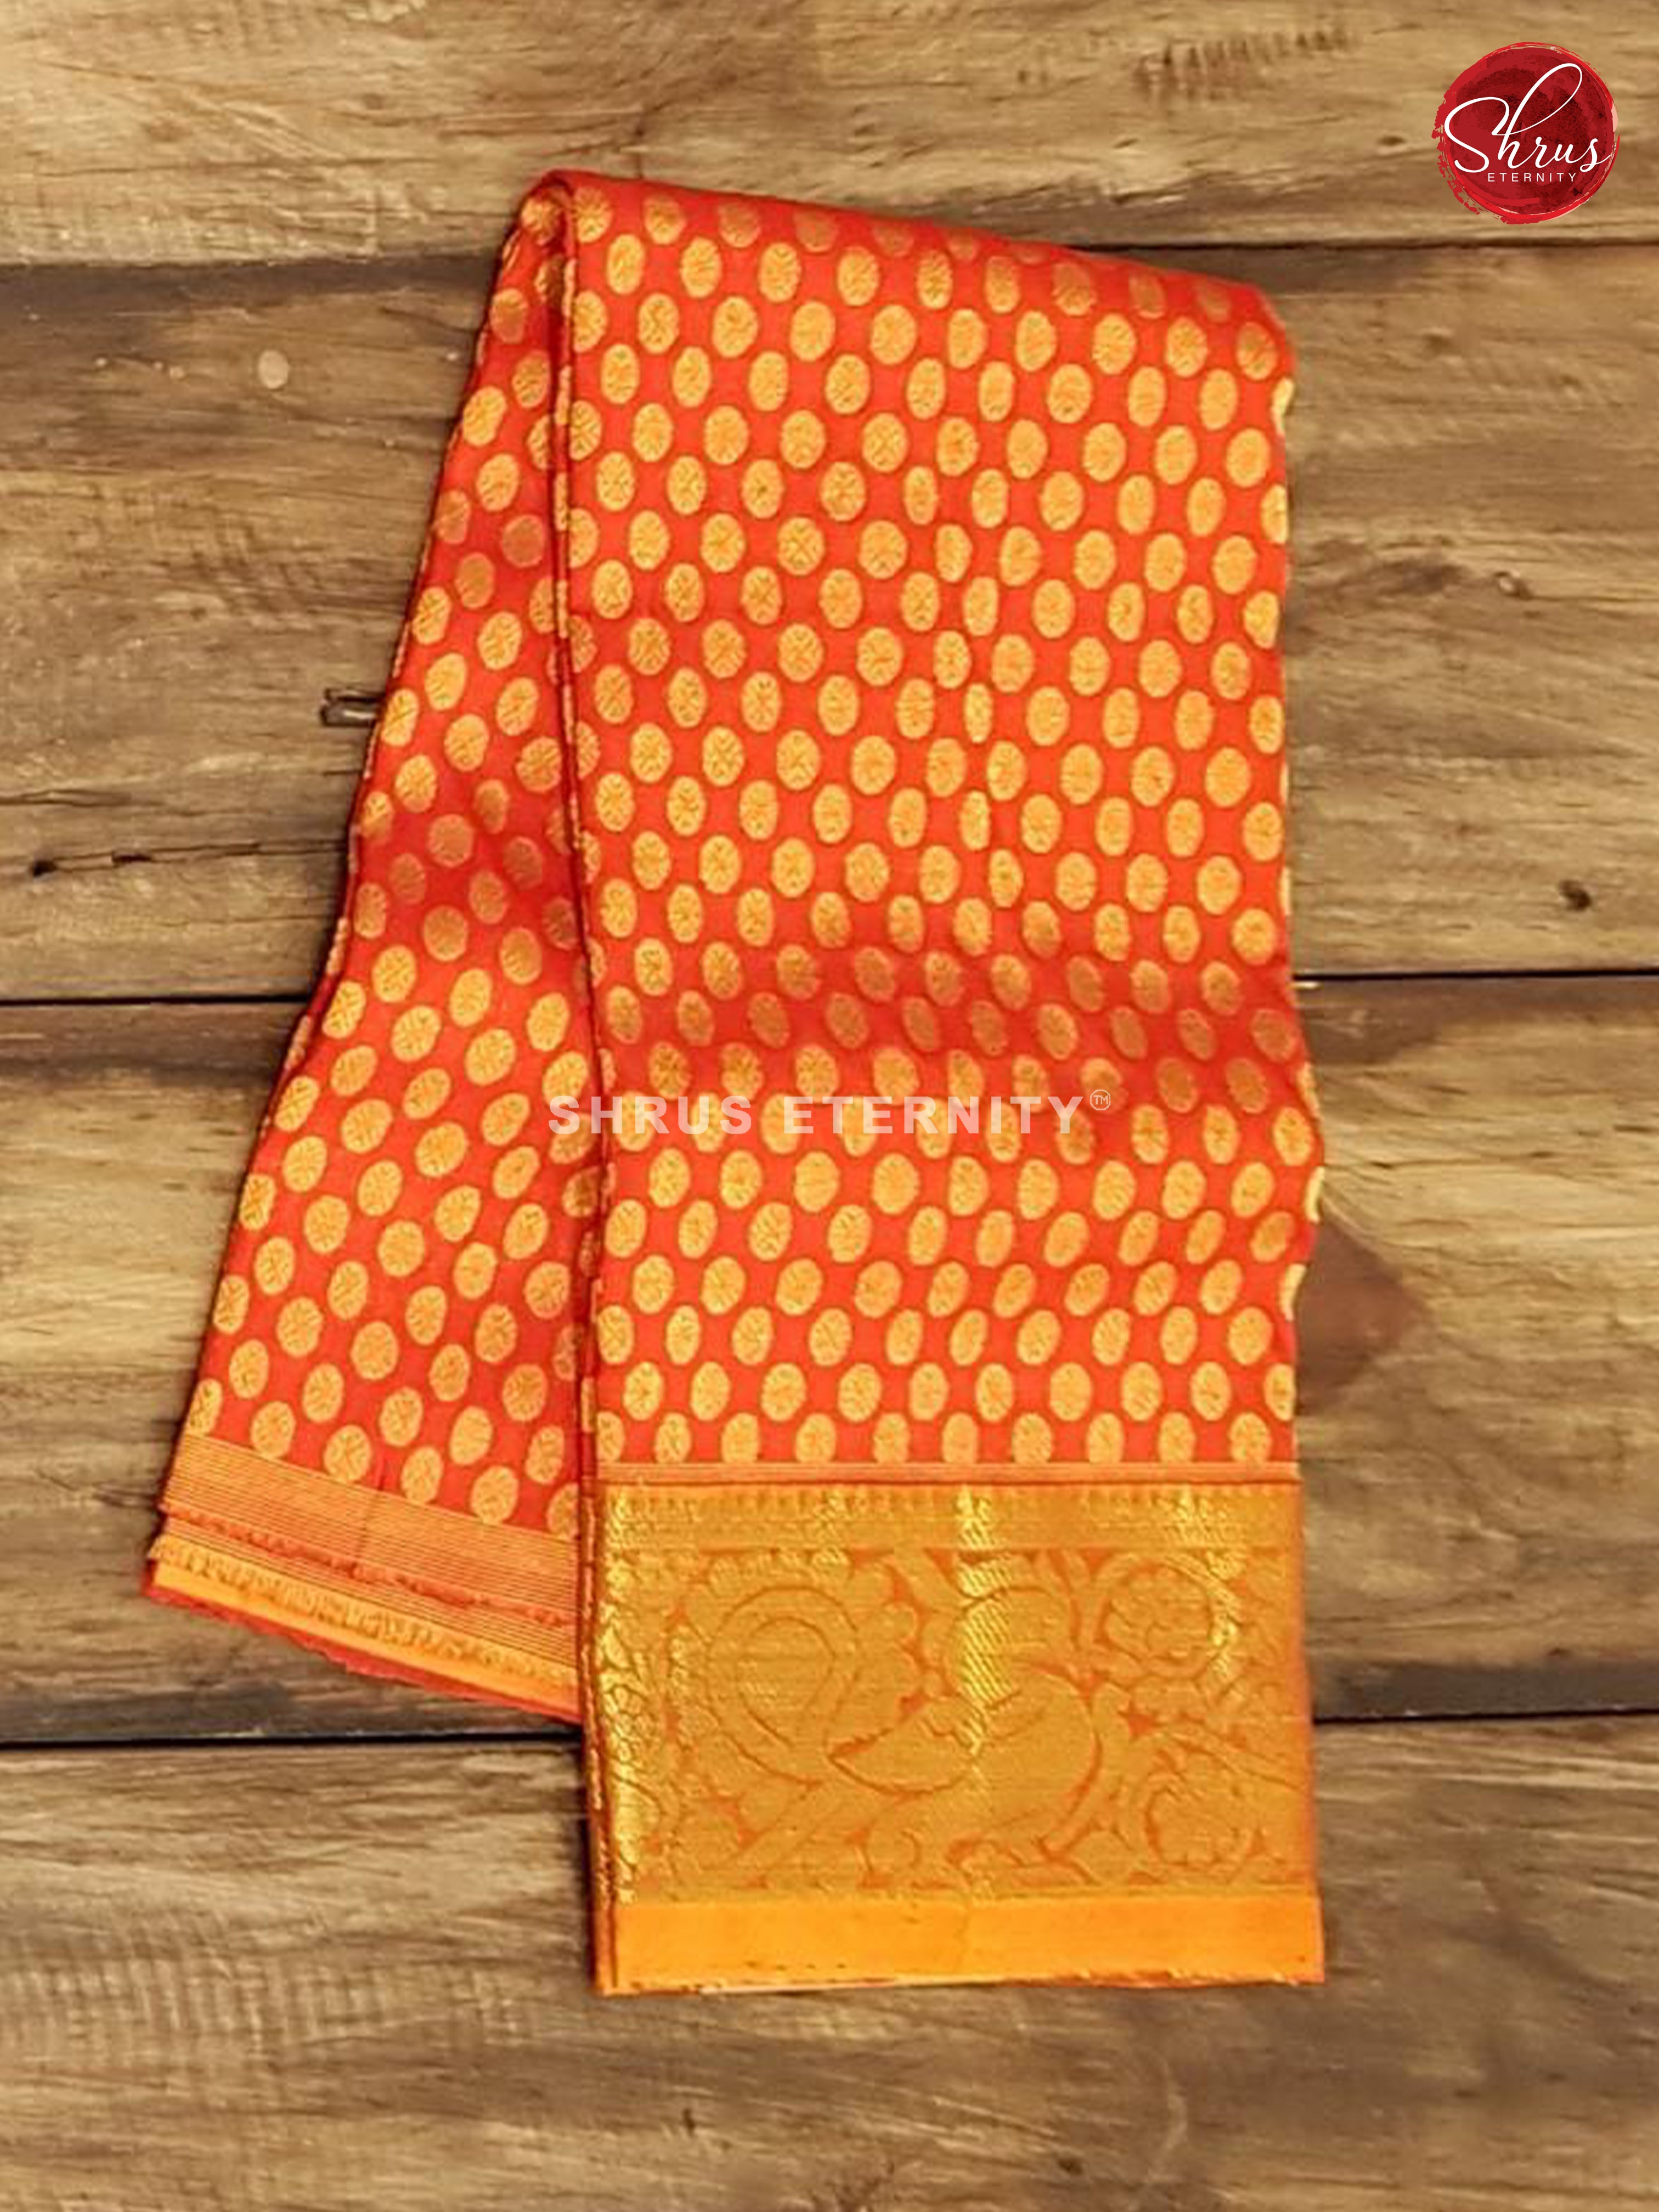 Orange & Red - Pattu Pavadai 0-2 Years - Shop on ShrusEternity.com